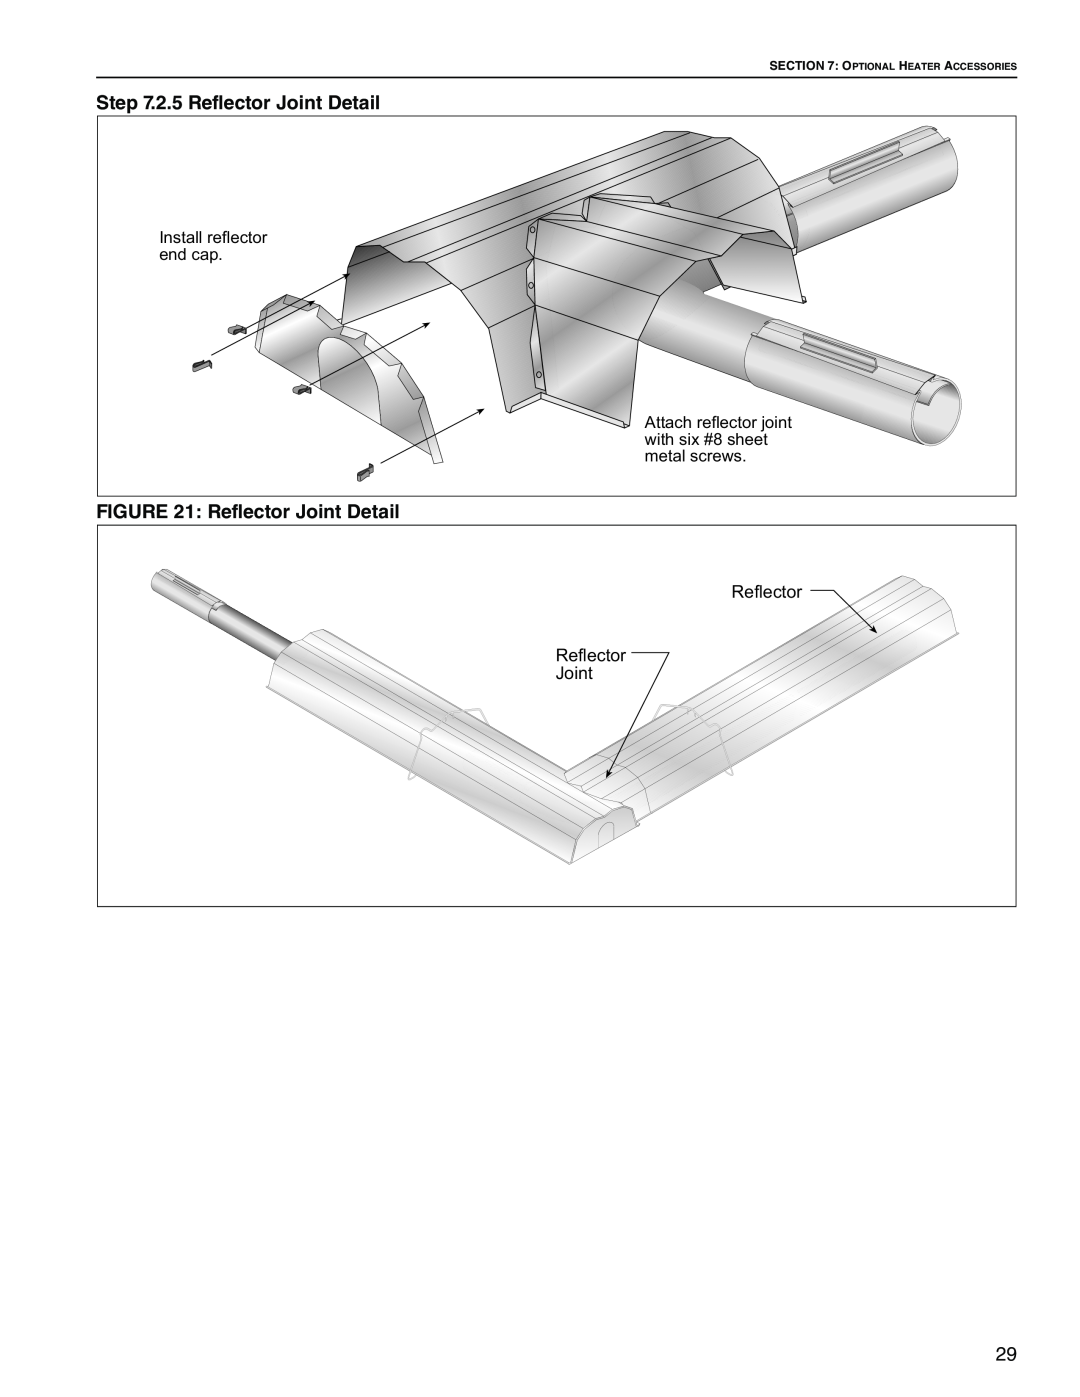 Roberts Gorden Linear Heater manual 2.5 Reflector Joint Detail, Install reflector, end cap, with six #8 sheet, metal screws 